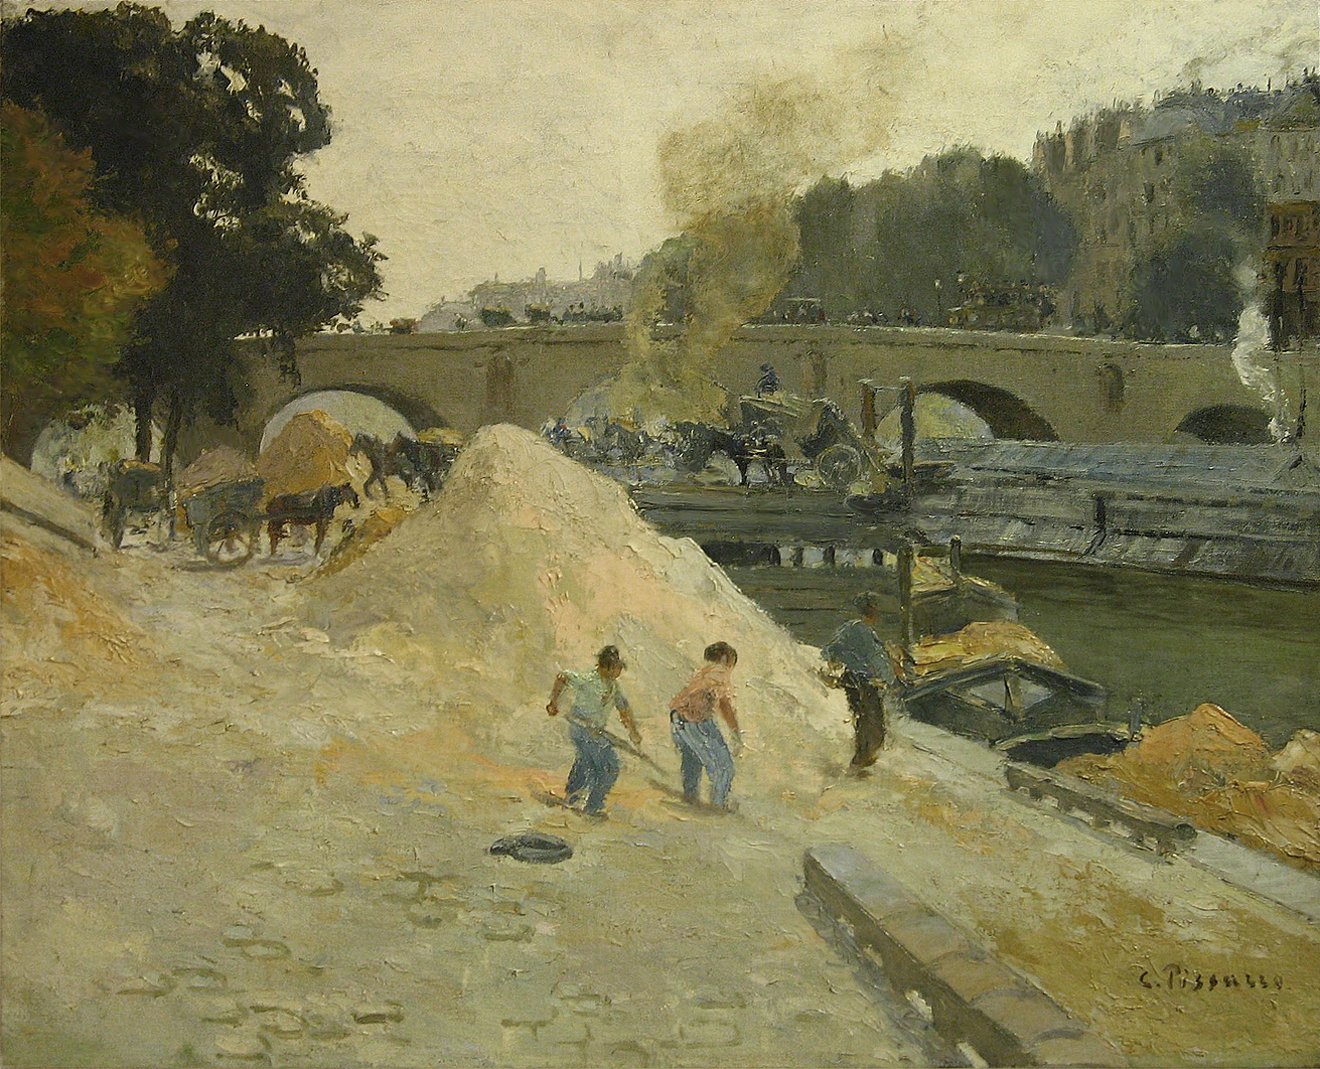 Camille+Pissarro-1830-1903 (293).jpg